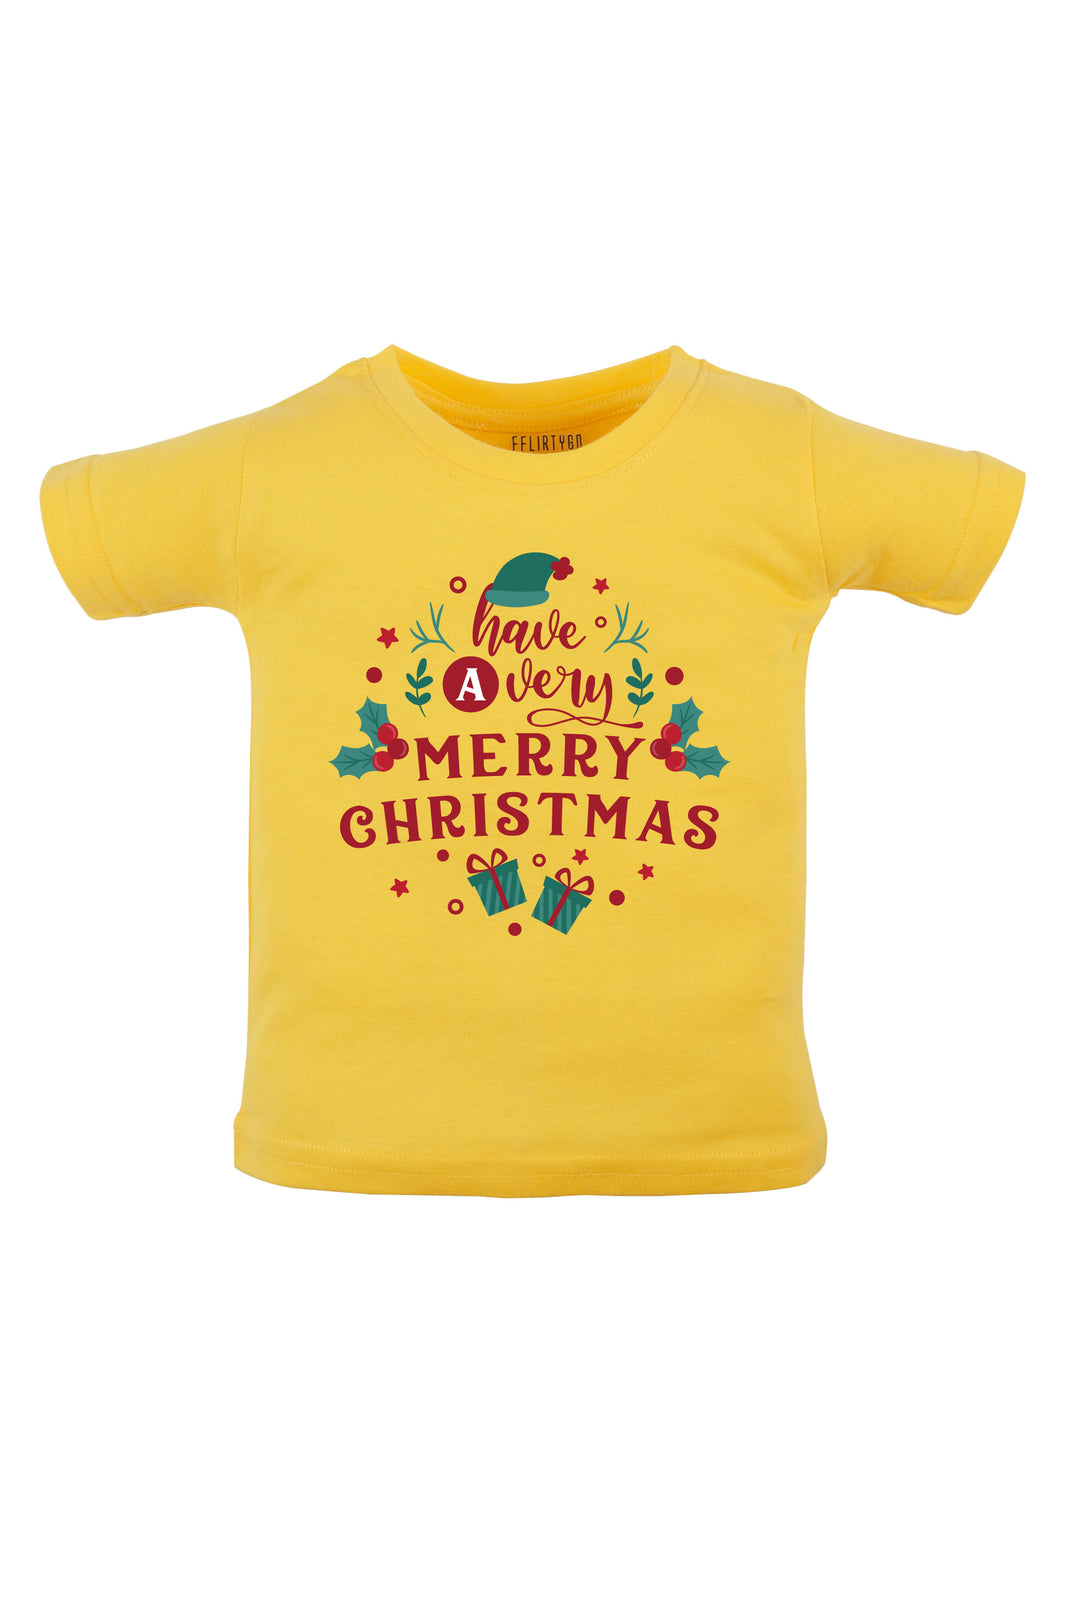 Have A Very Merry Christmas Kids T Shirt w/Custom Name